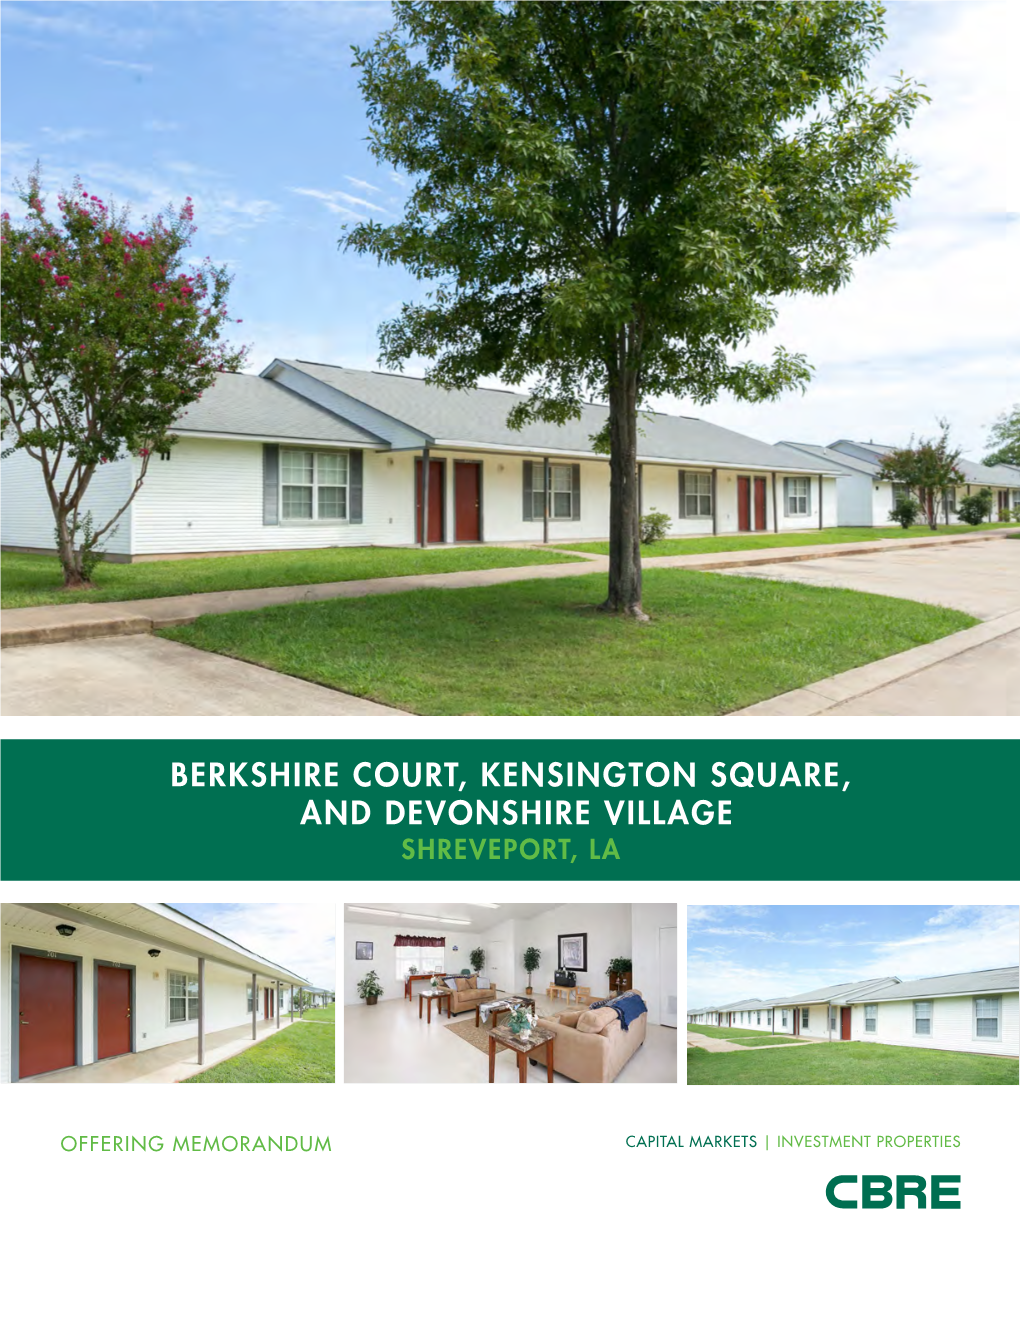 Berkshire Court, Kensington Square, and Devonshire Village Shreveport, La